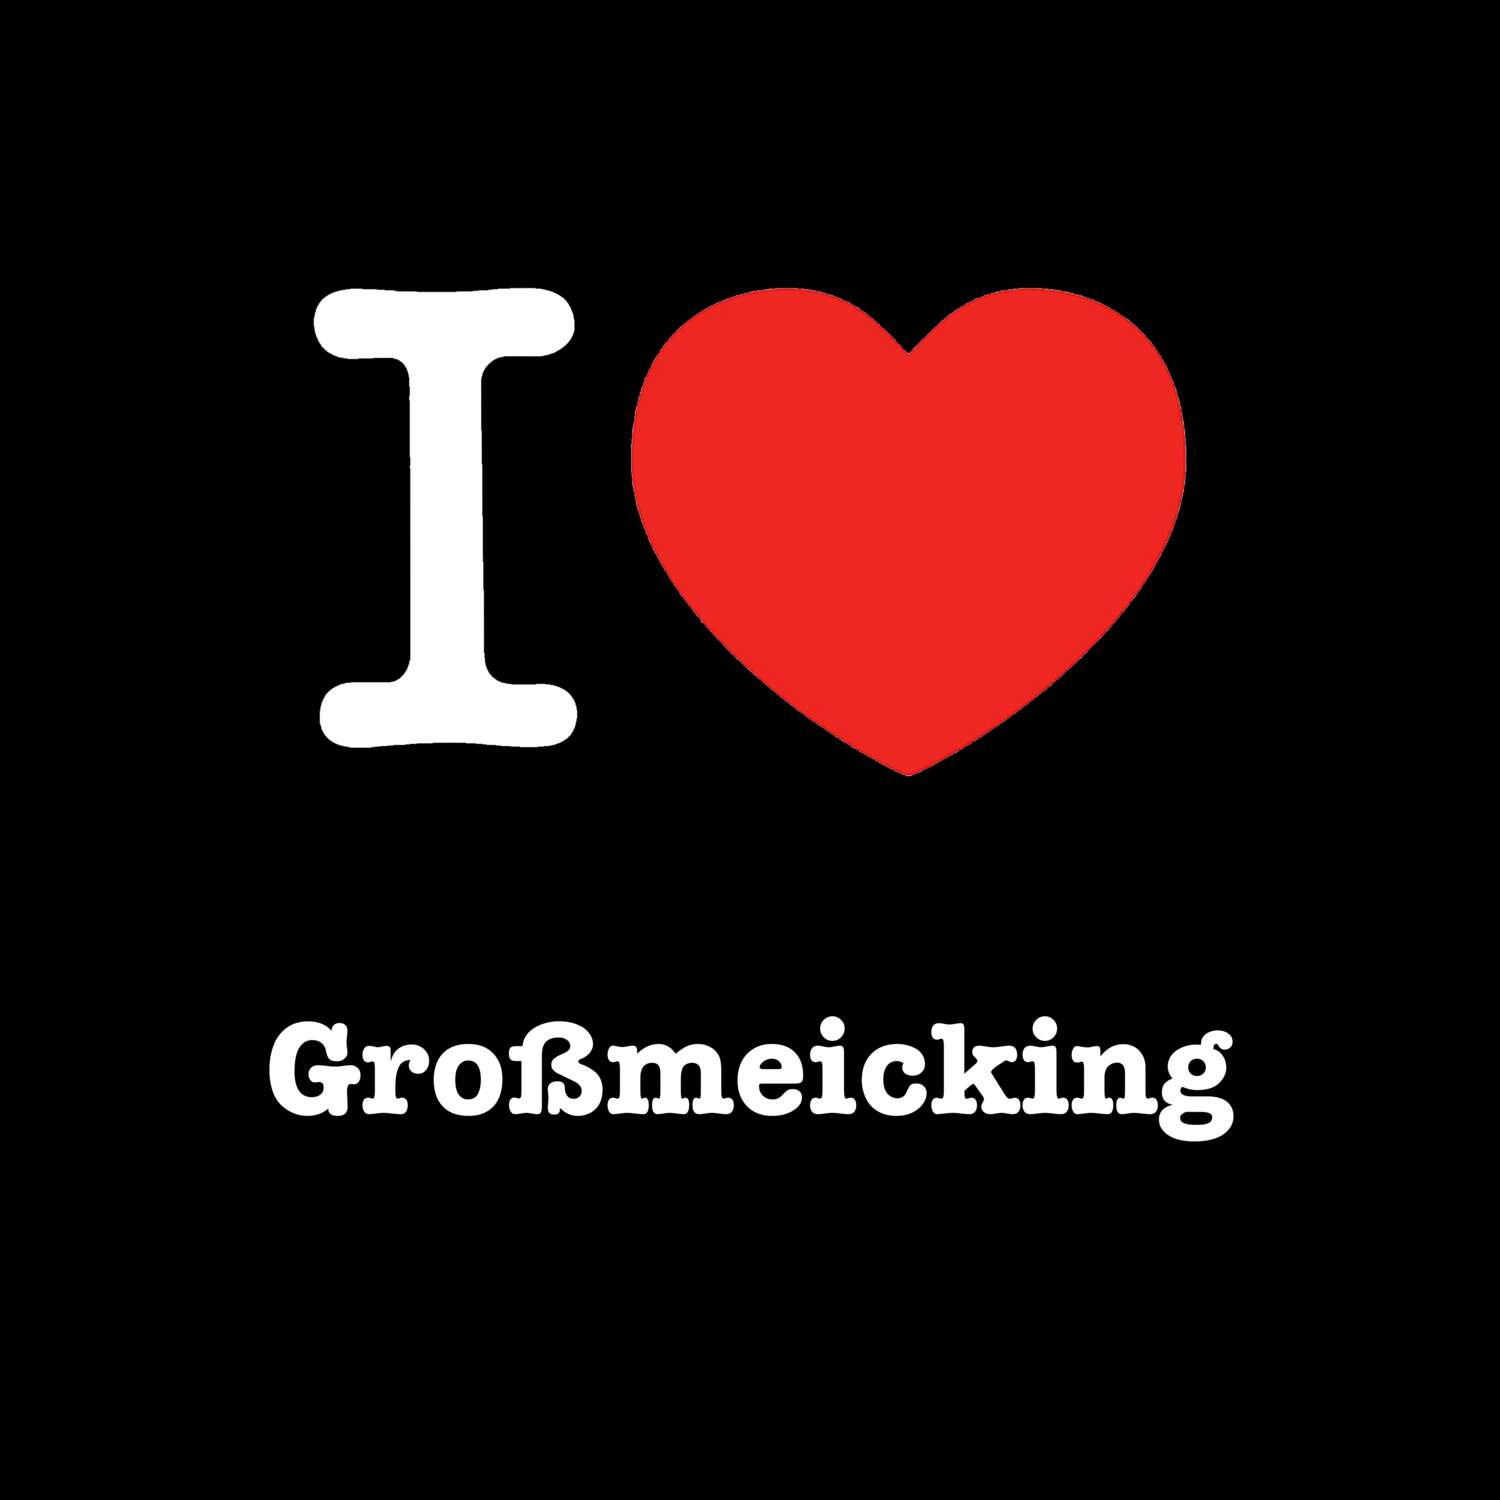 Großmeicking T-Shirt »I love«